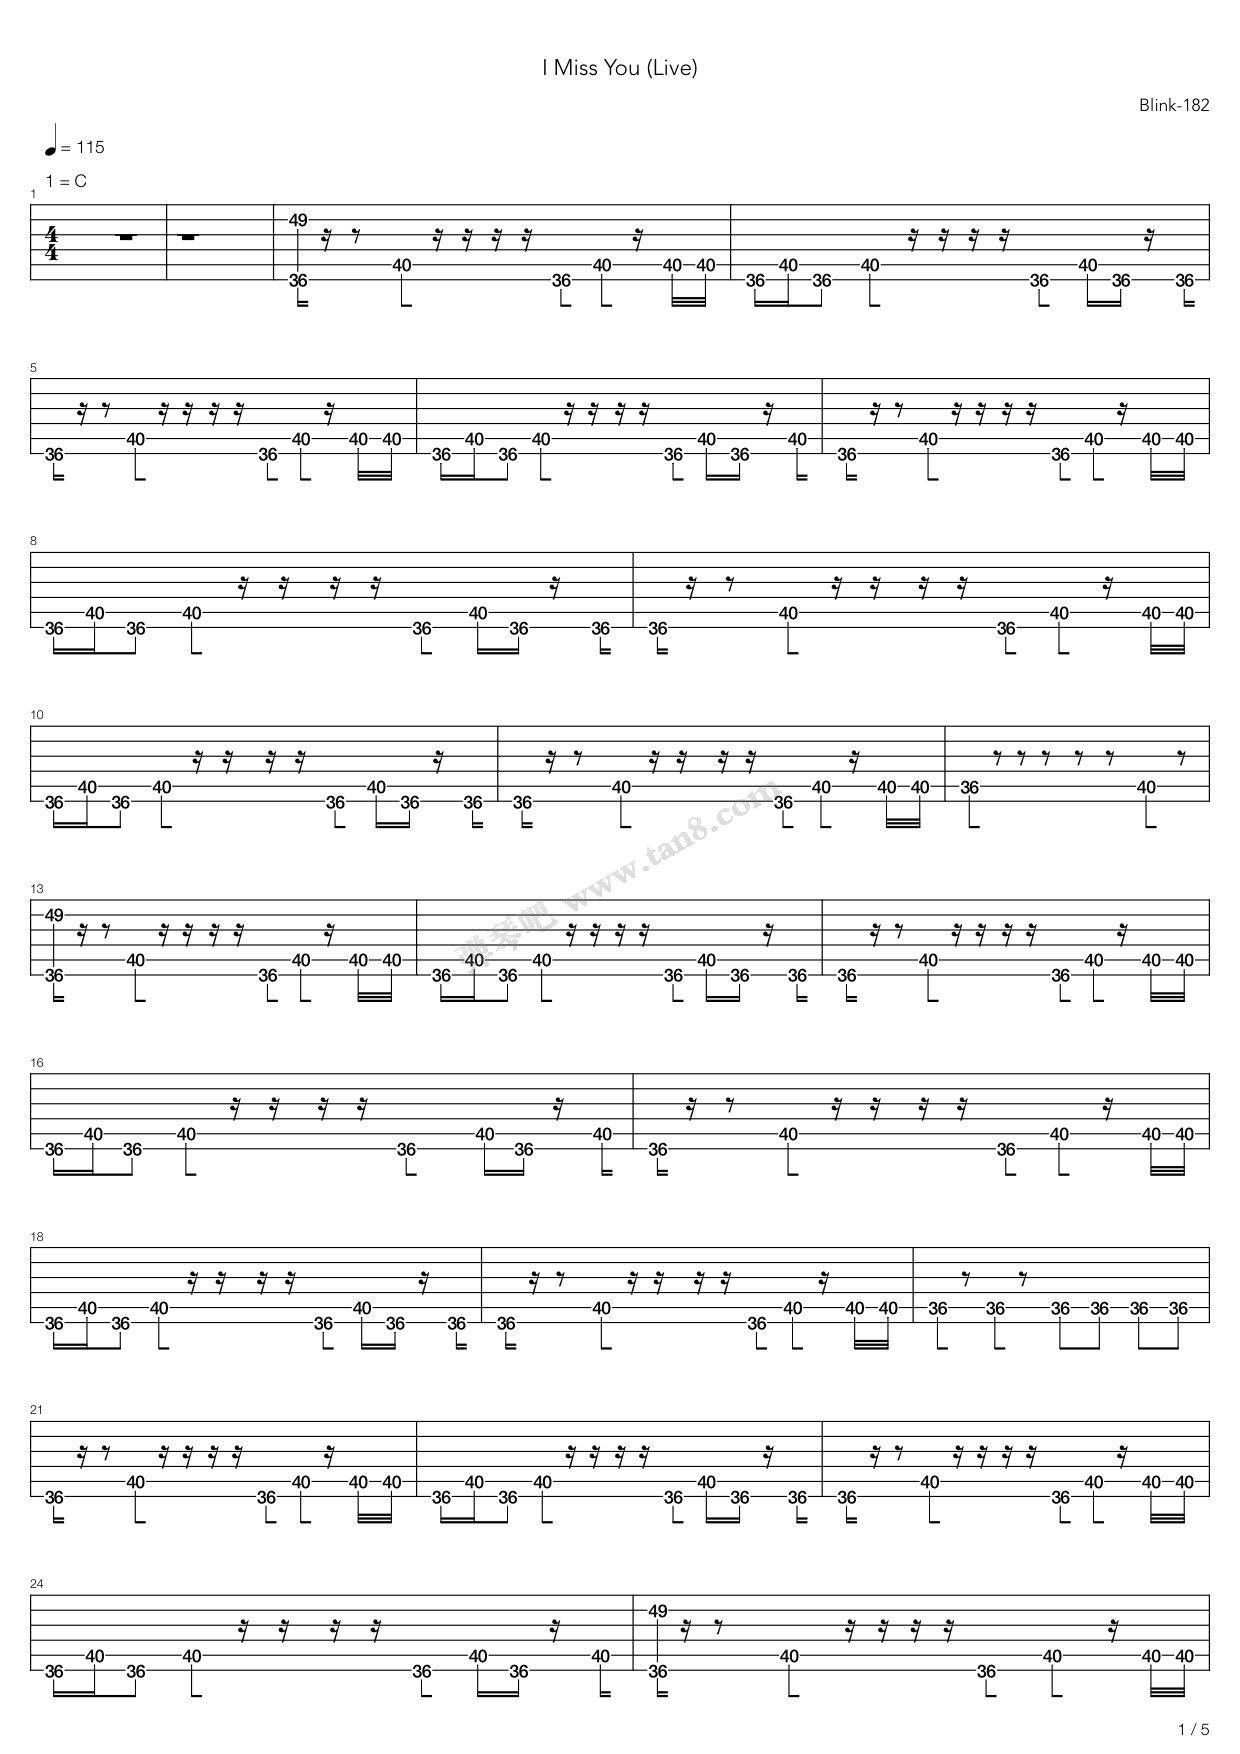 Blink-182 - I Miss You sheet music for guitar (tablature) [PDF]